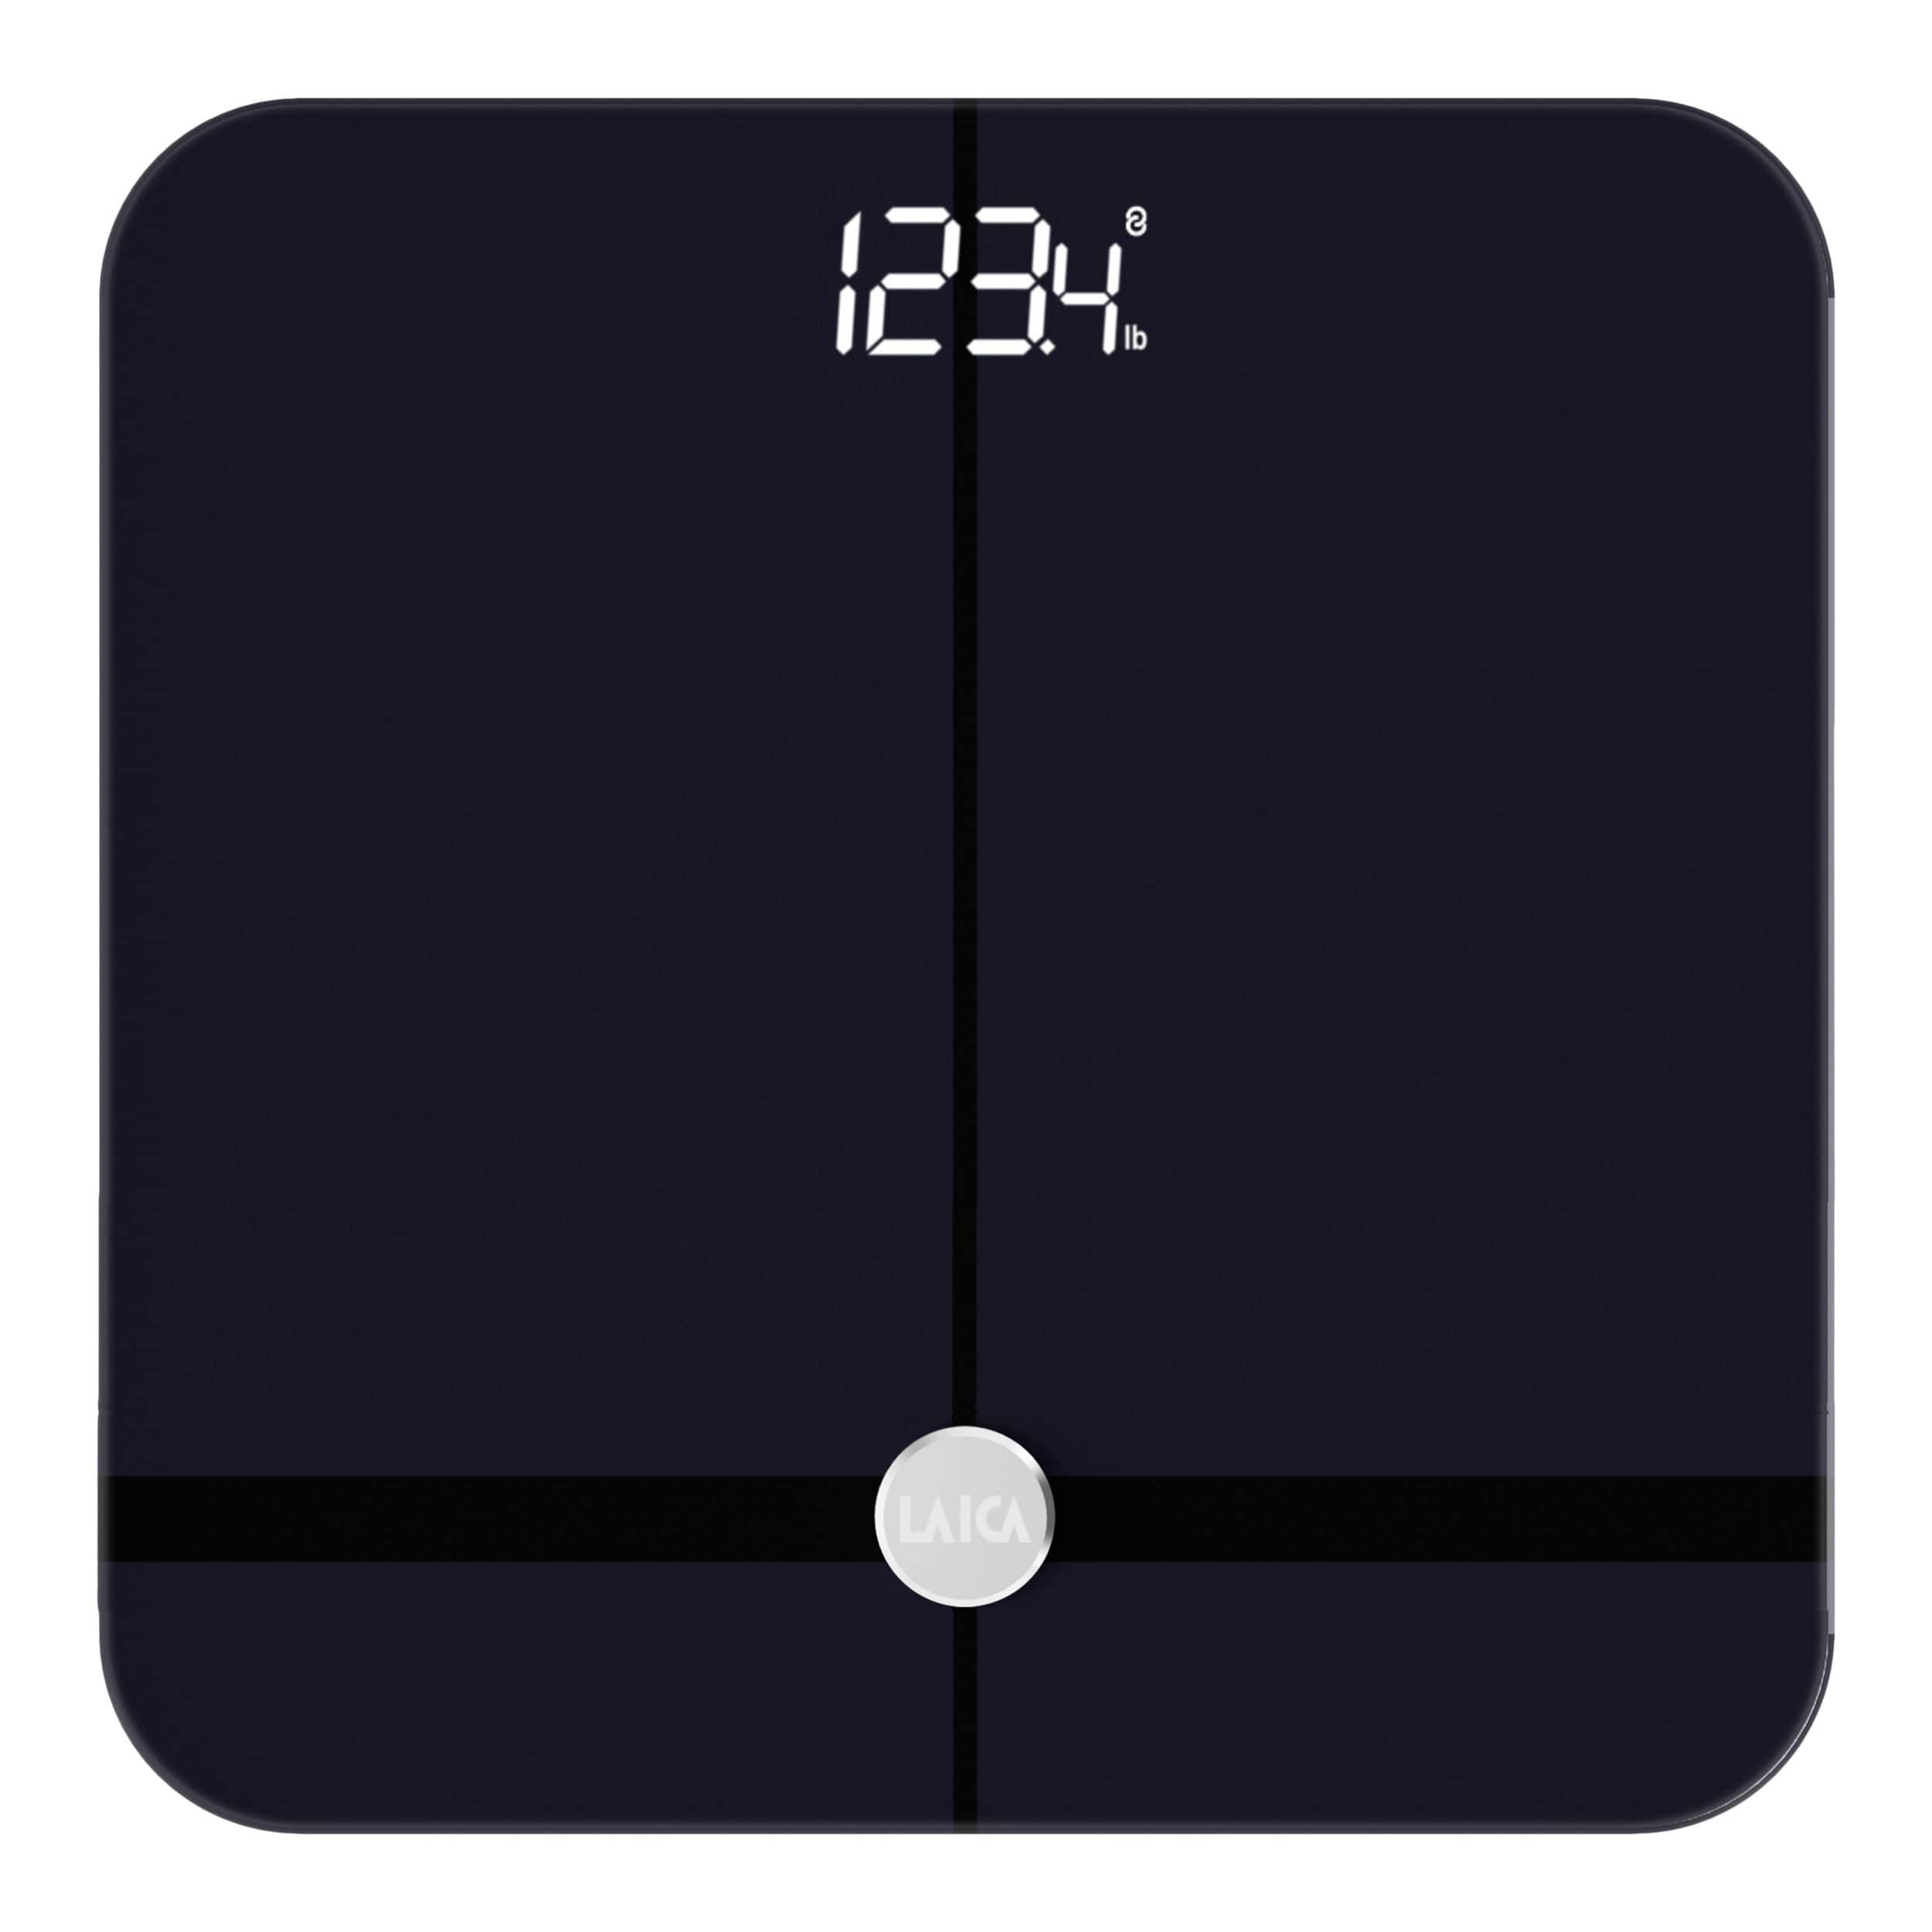 Laica Digital Smart Bathroom Scale with Bluetooth technology, 400